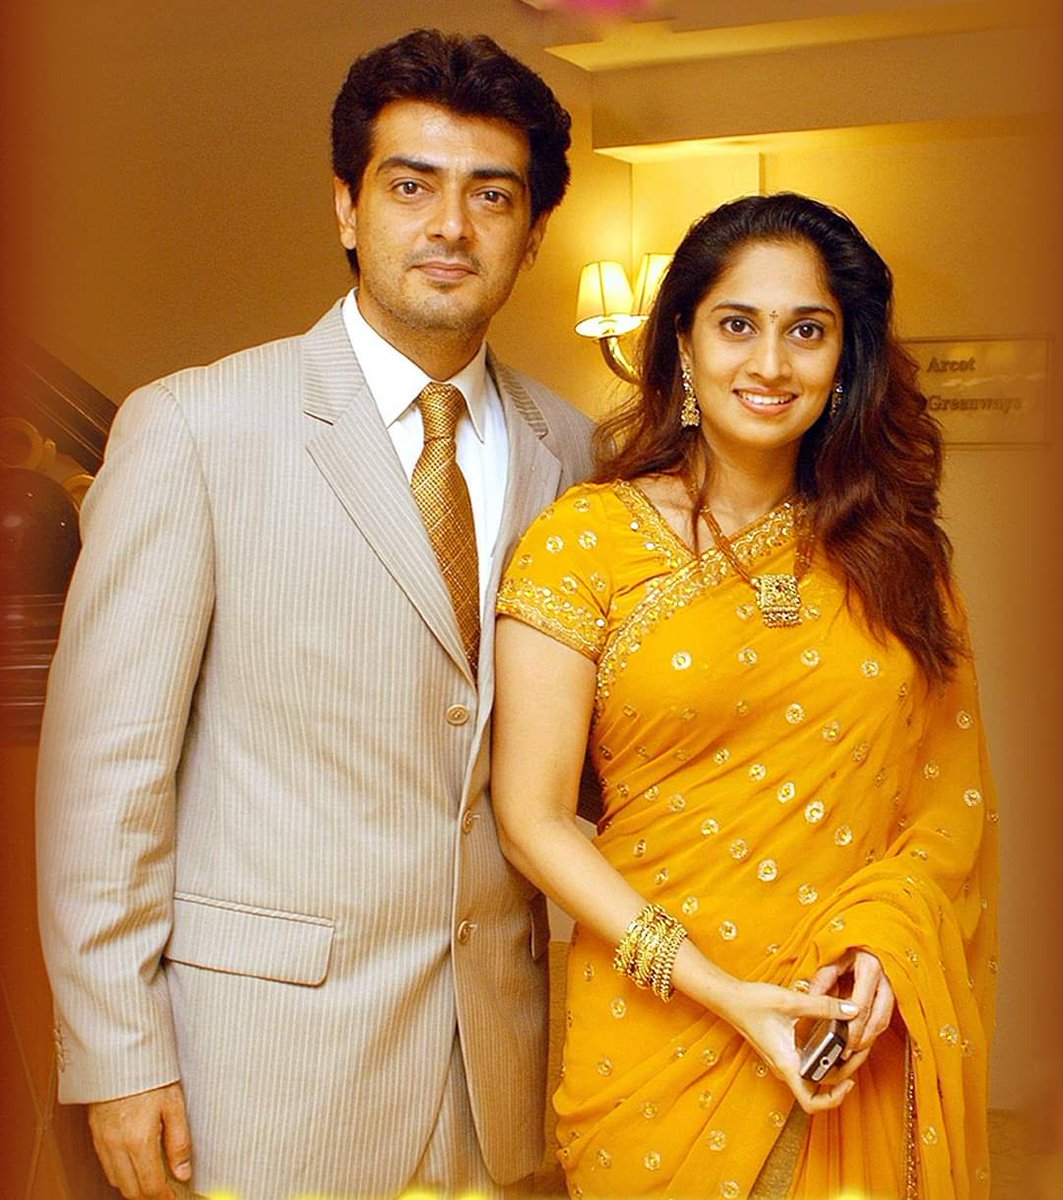 HAPPY WEDDING ANNIVERSARY To The Most Adorable Couple Mr & Mrs #AjithKumar 💝💖.

#ShaliniAjithKumar #VidaaMuyarchi #GoodBadUgly